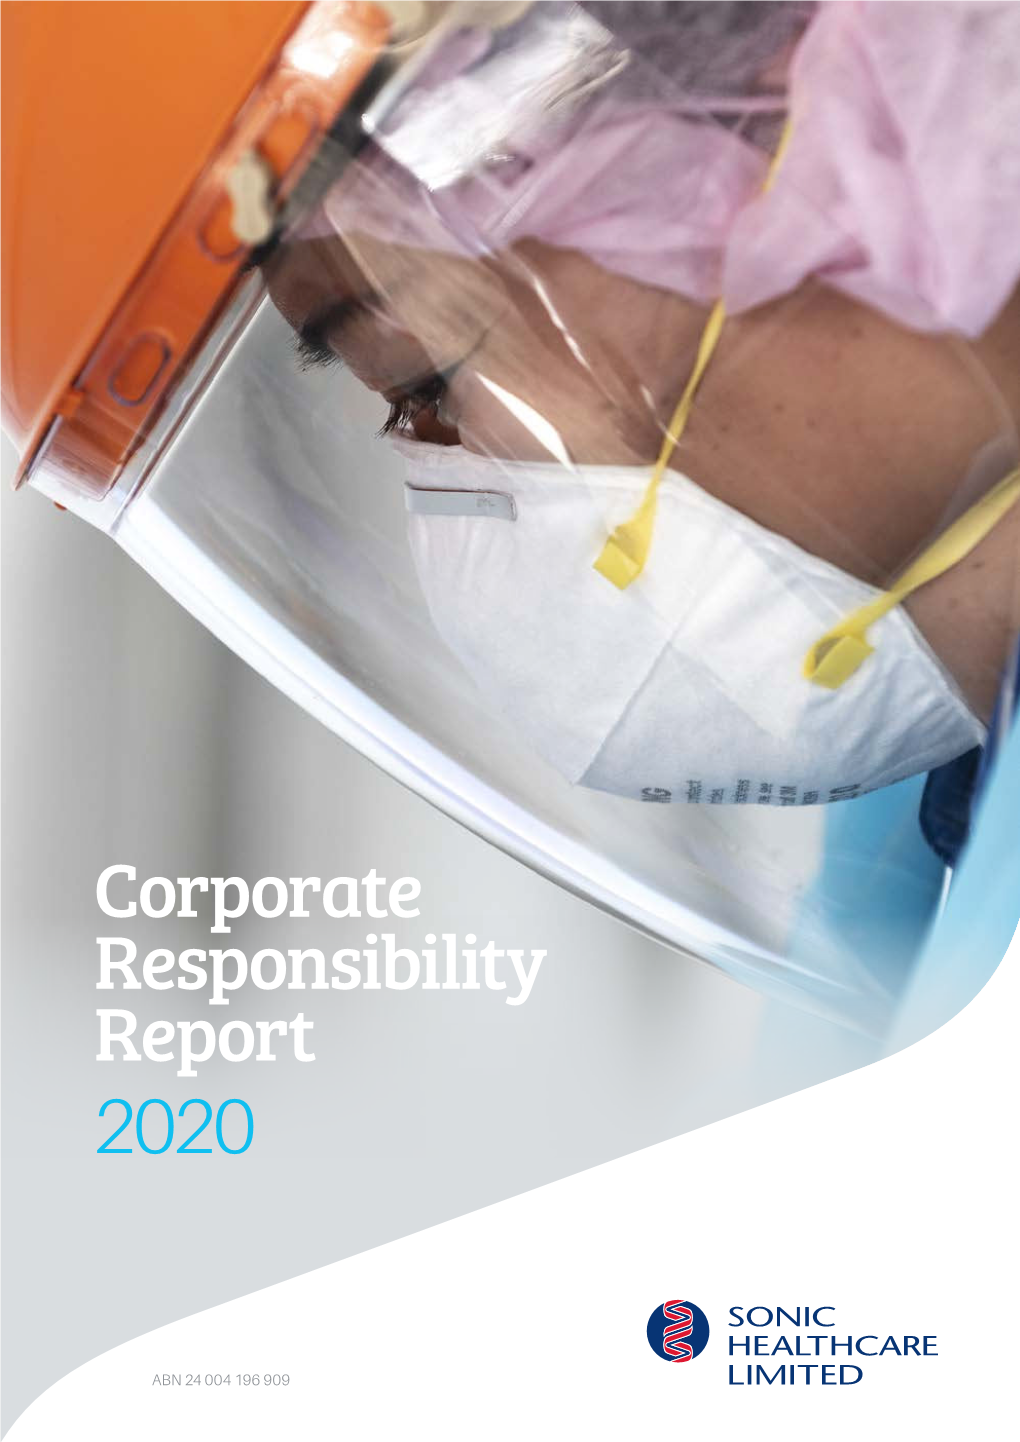 Corporate Responsibility Report 2020